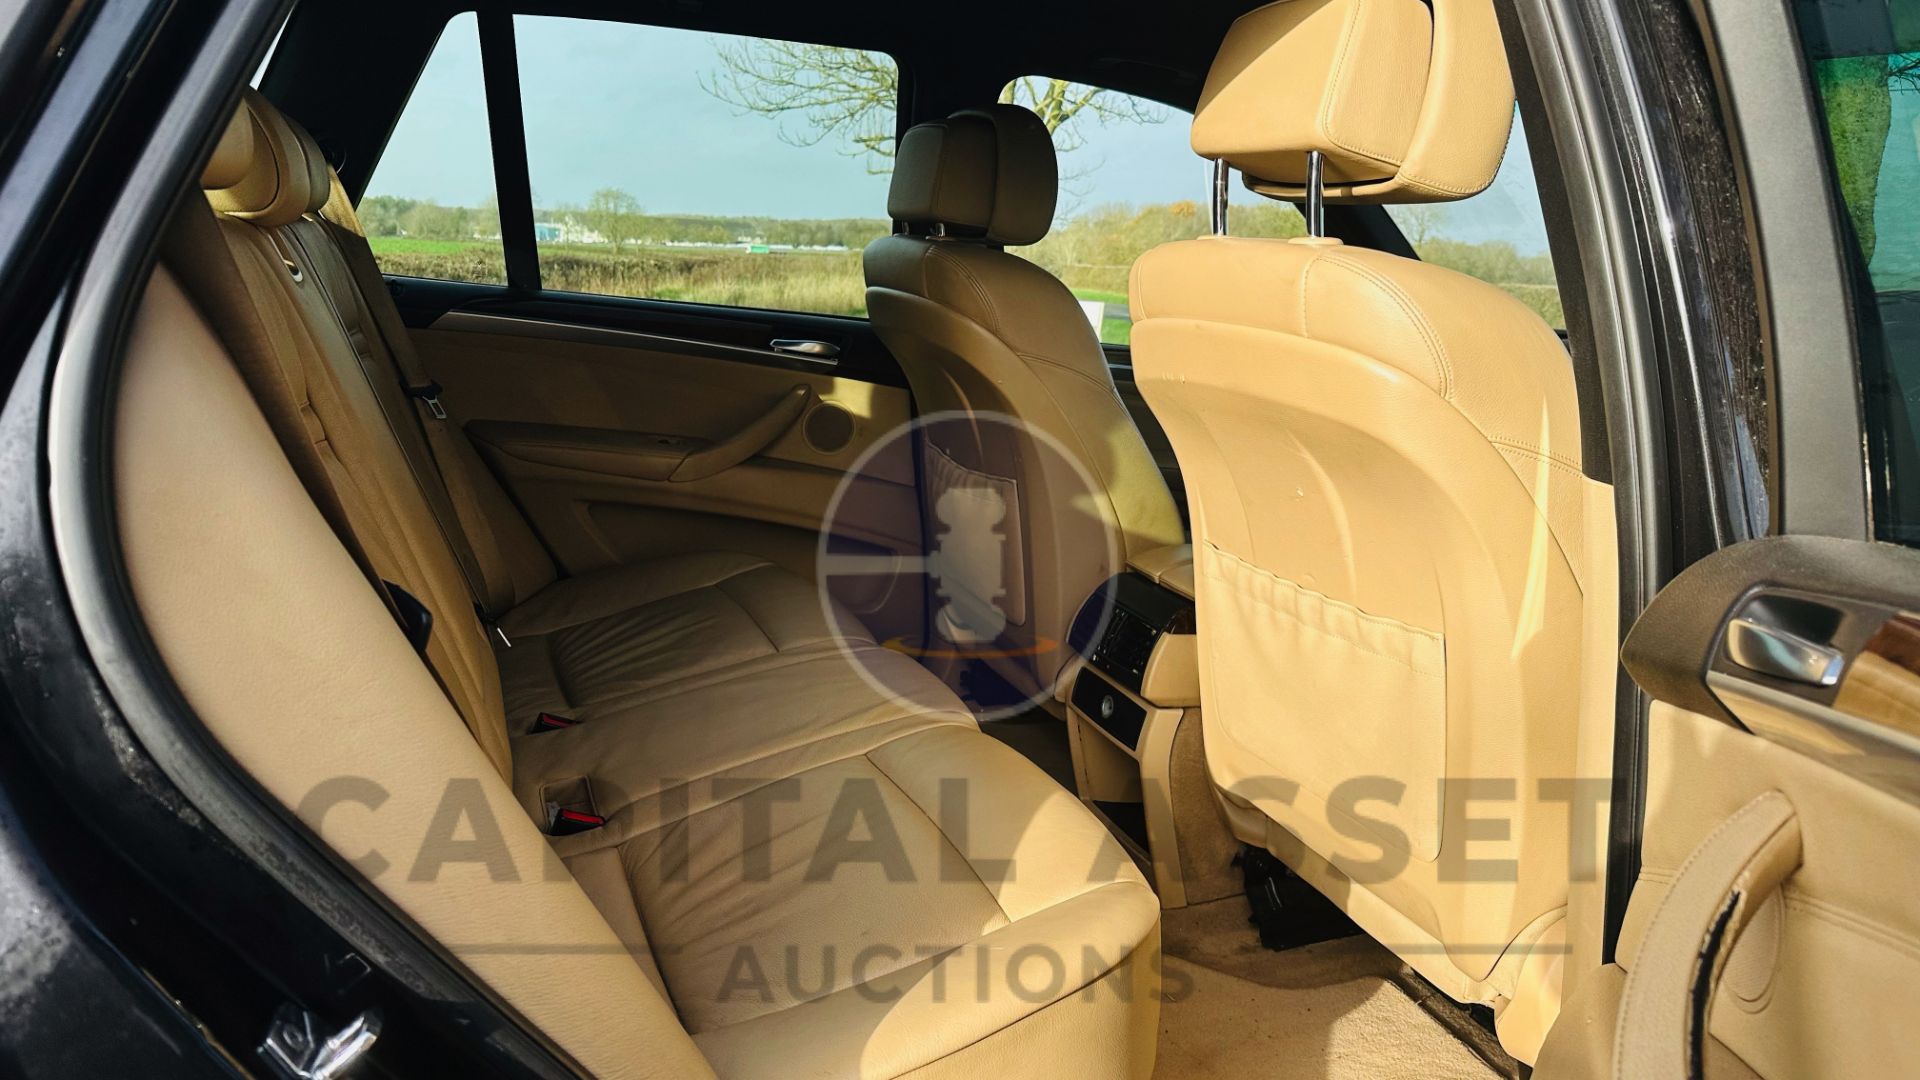 BMW X5 'X-DRIVE 30D' *SPECIAL EDITION* 5 DOOR SUV (2010) 3.0 DIESEL - AUTOMATIC (NO VAT) *HUGE SPEC* - Image 28 of 45